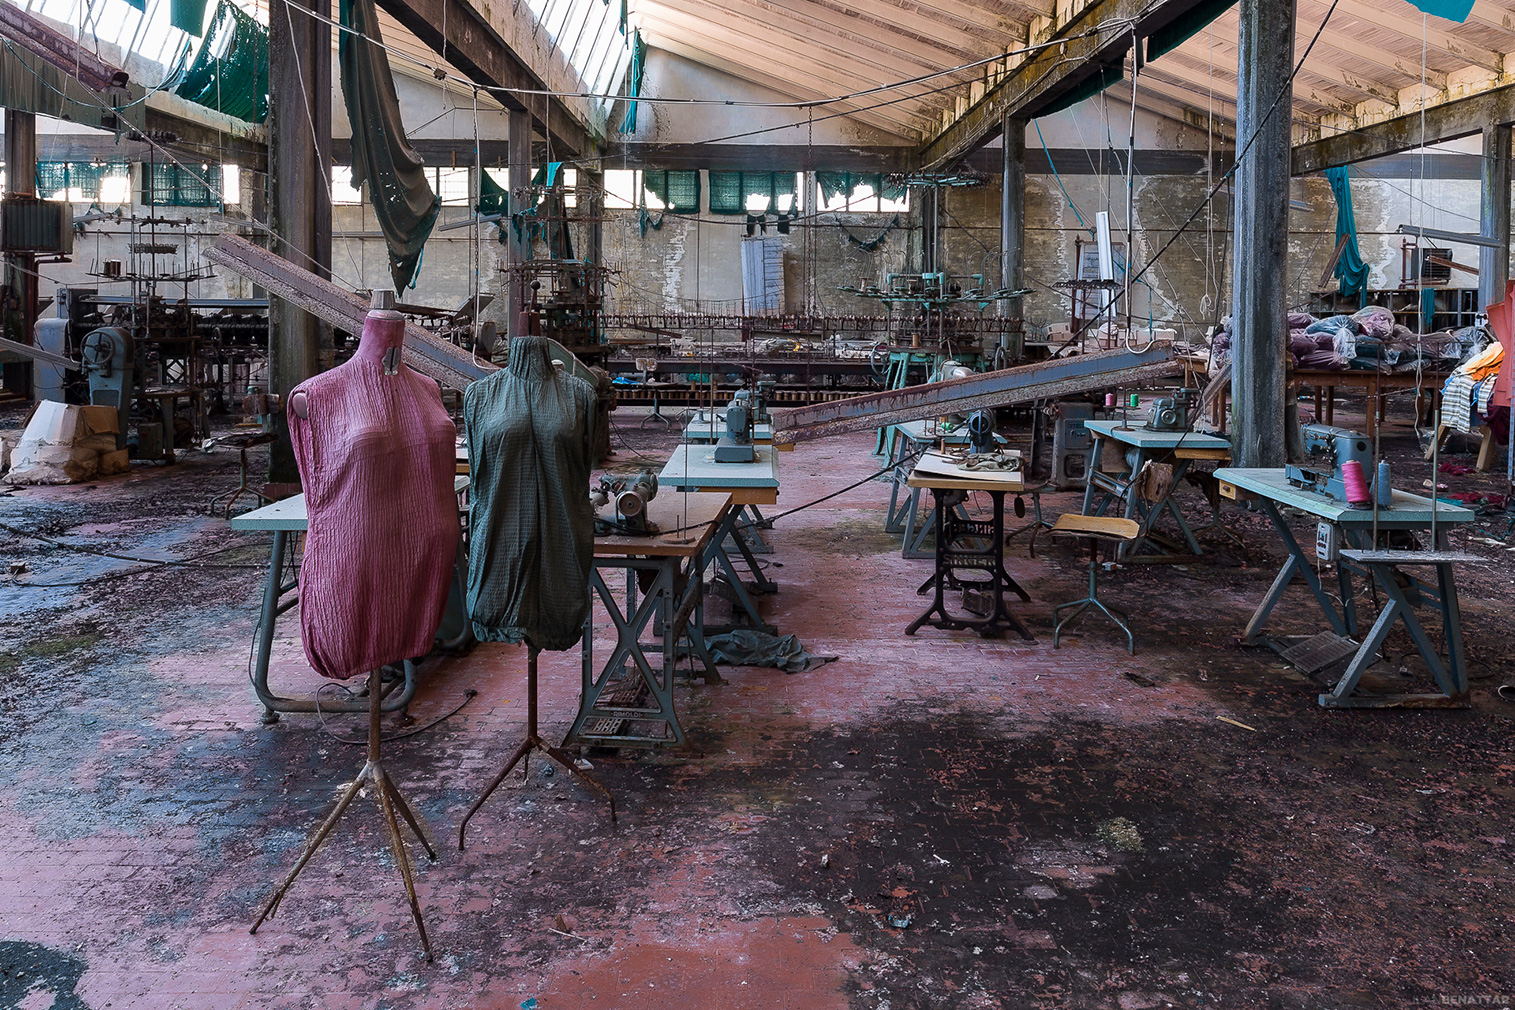 Lost factories series by Ilan Benettar. Abandoned factories